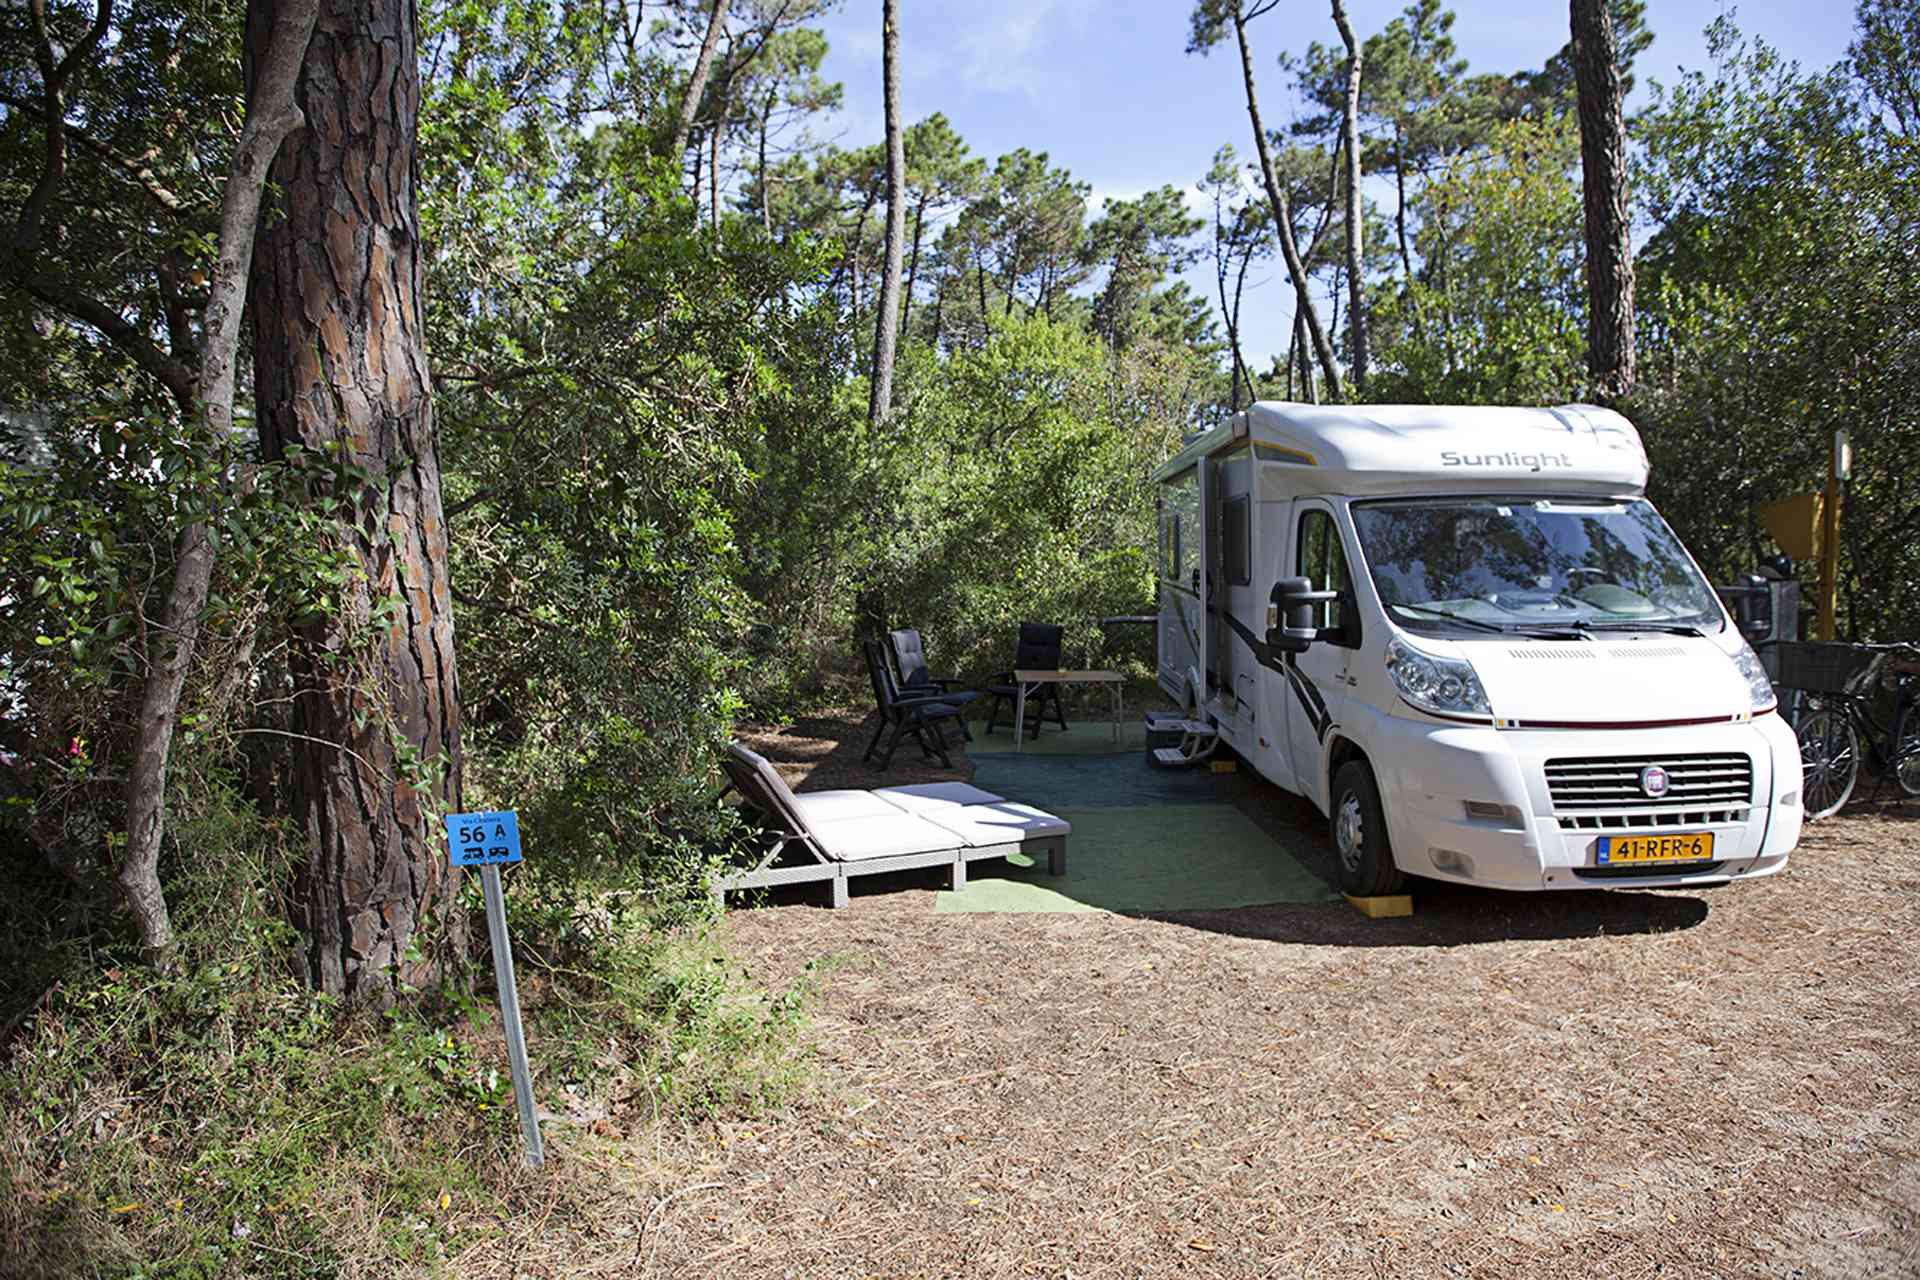 Emplacement - Emplacement Cat. 'B' 1500W Pour Caravane, Camping Car, Tente-Remorque - PuntAla Camp & Resort